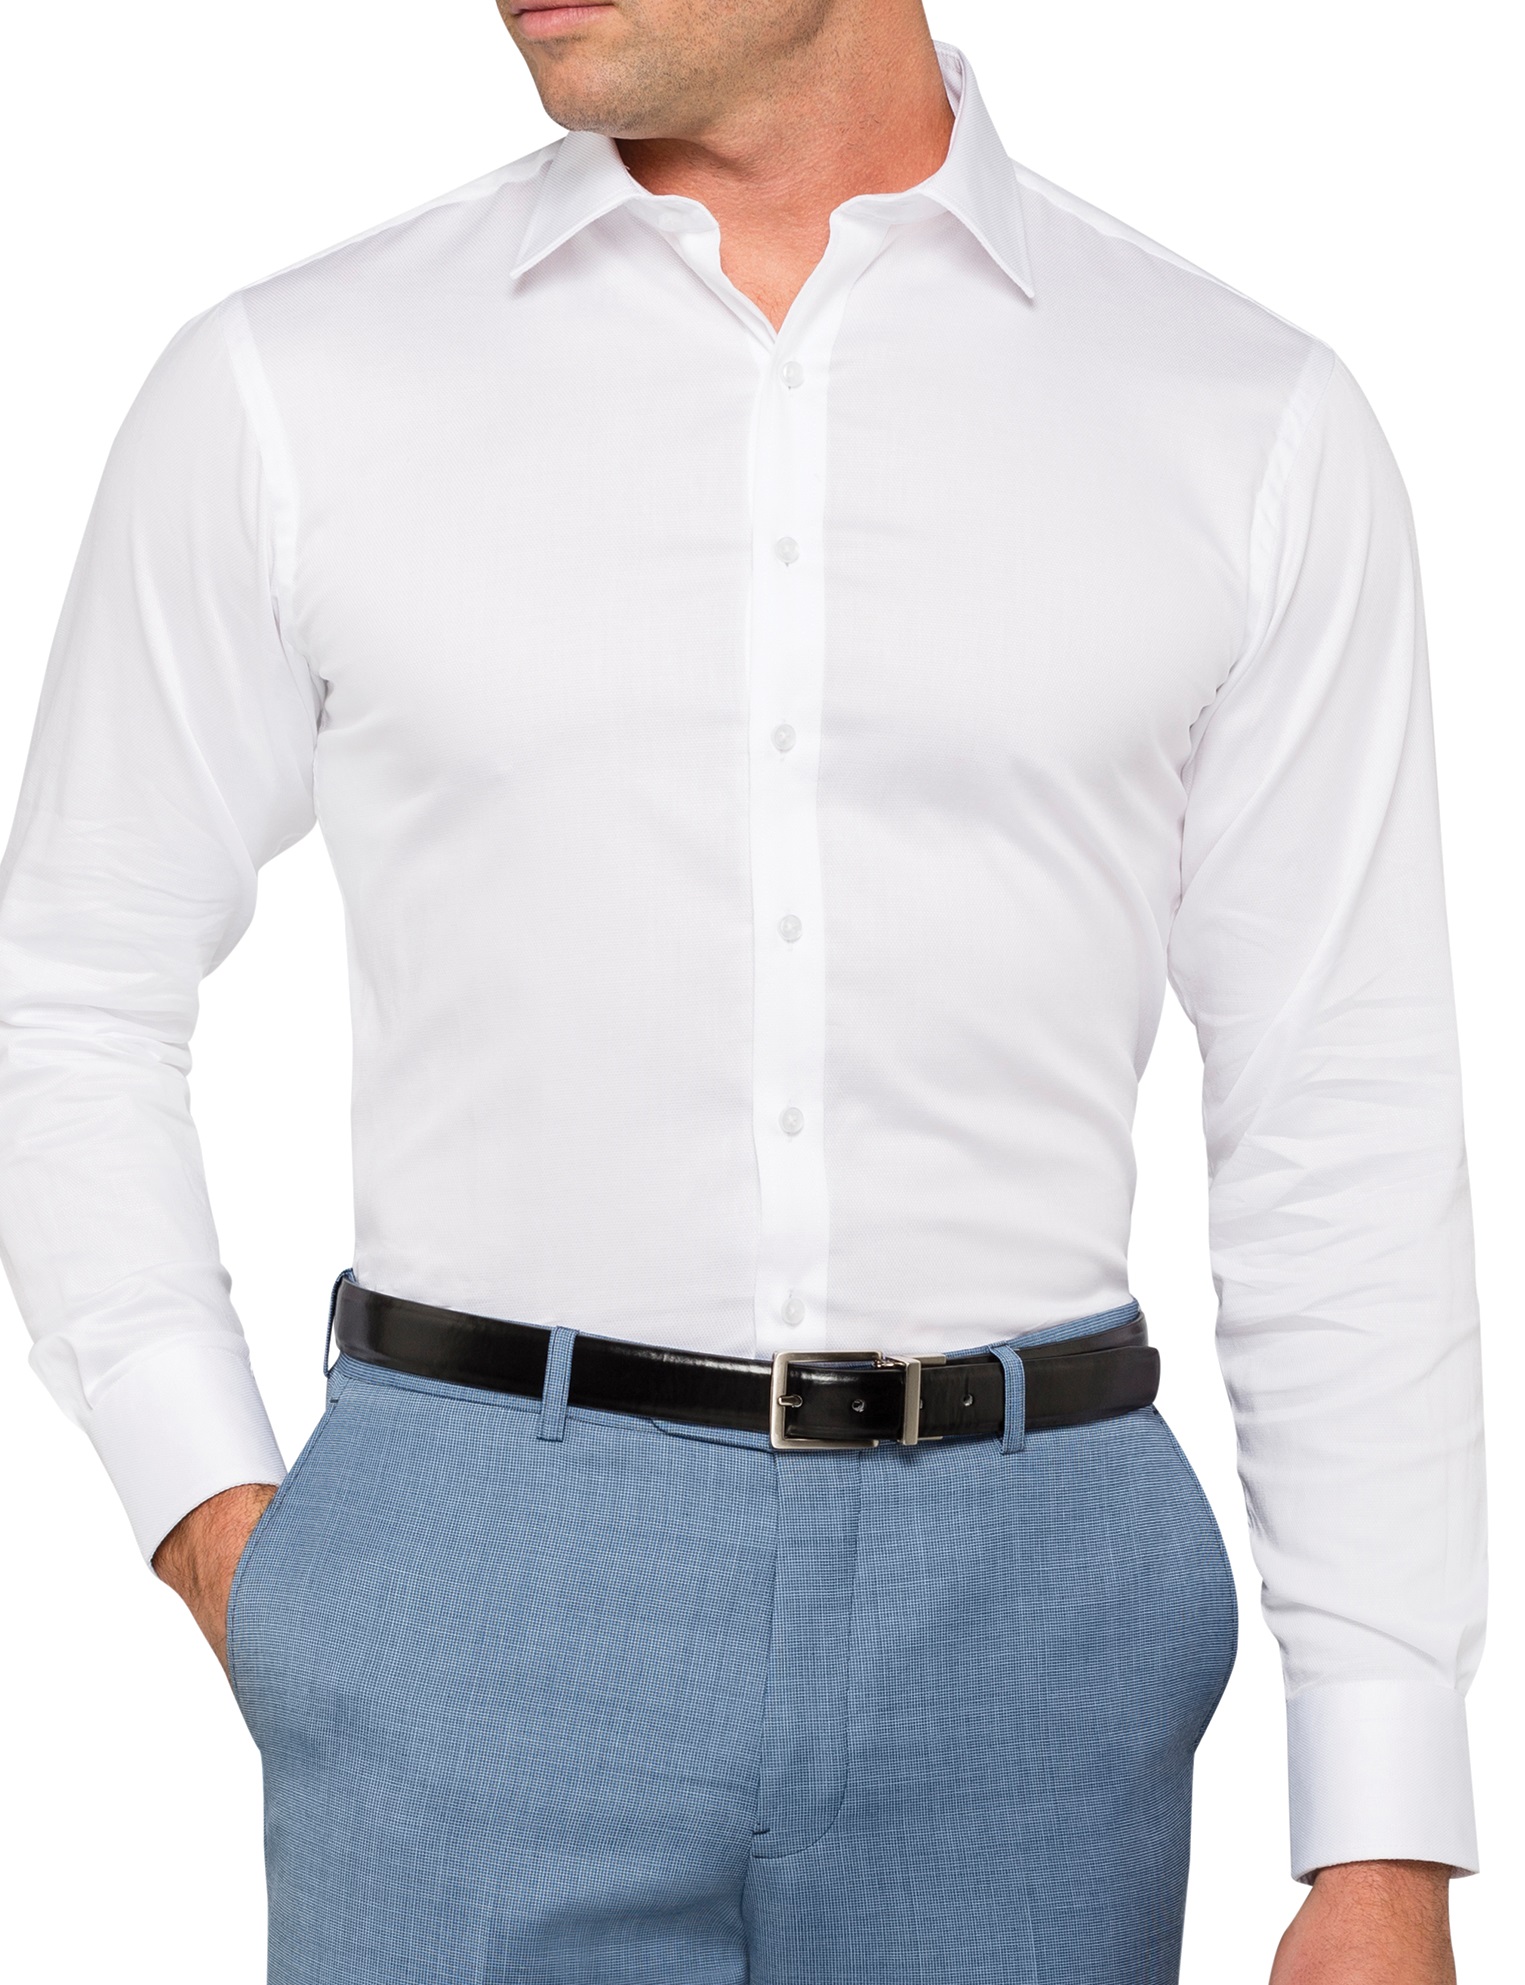 Van Heusen Shirts | White Shirts at Business Shirts Plus